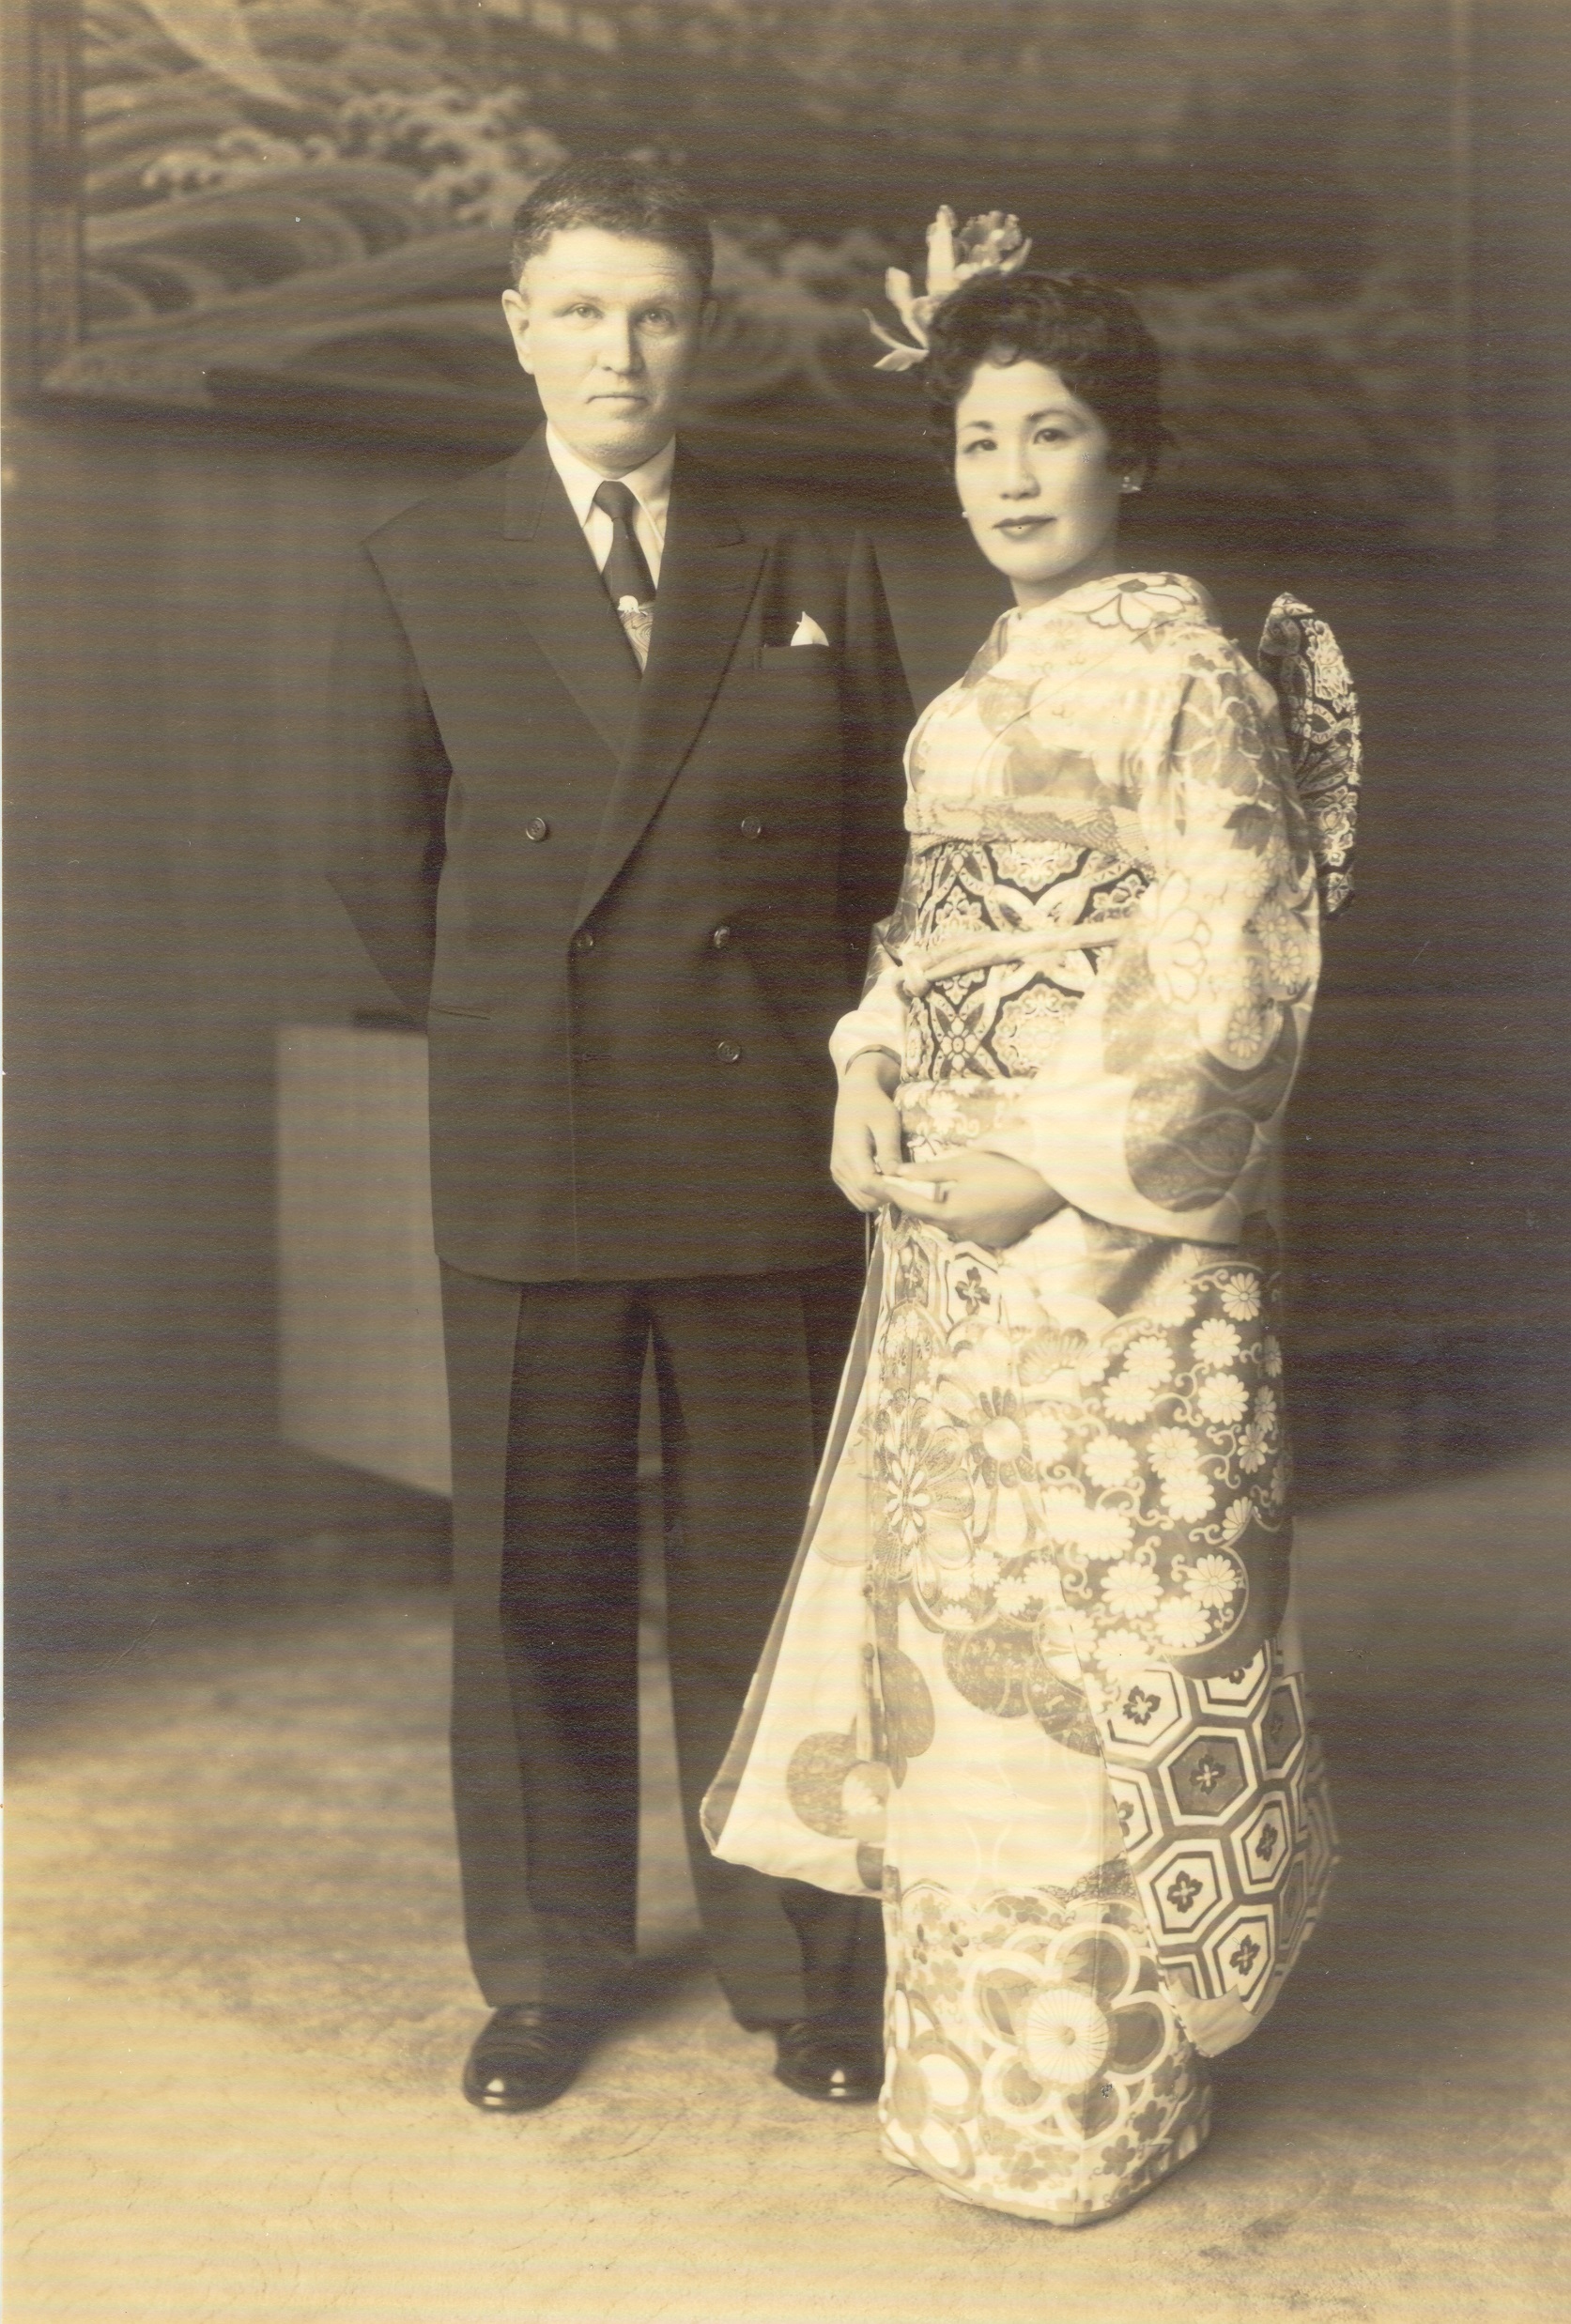 A black and white wedding portrait of Cornelius and Mine Crane